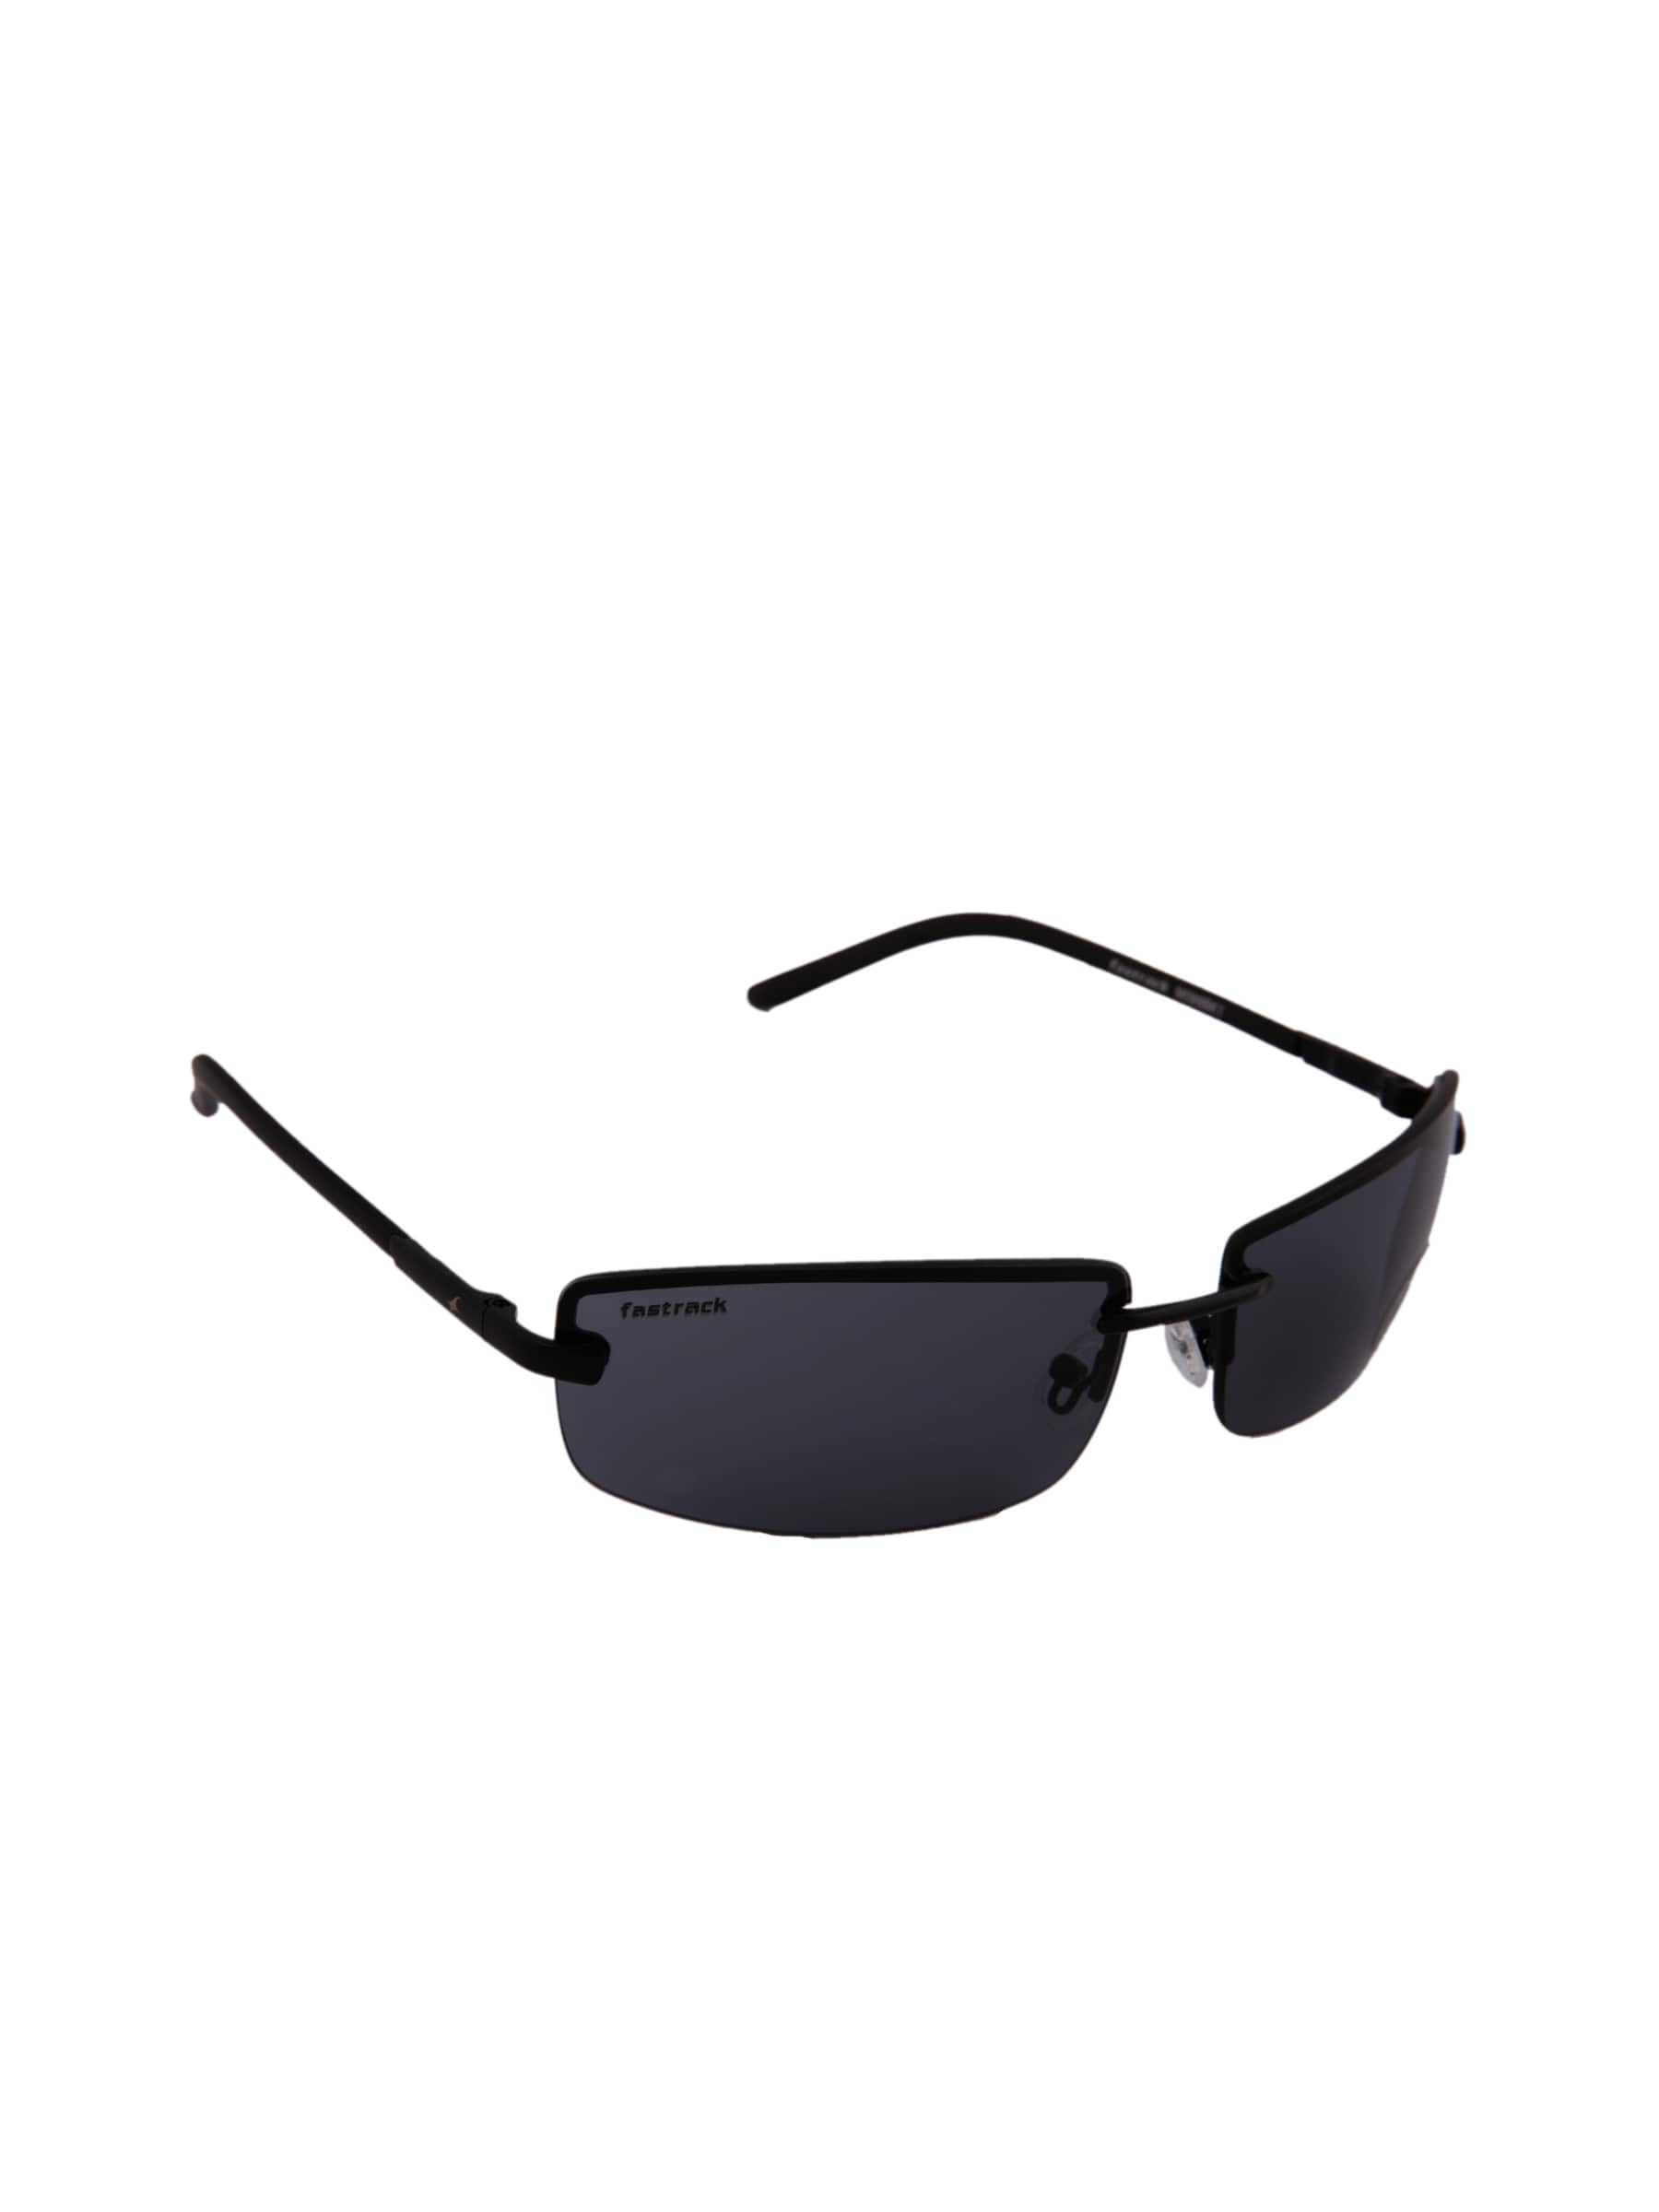 Fastrack Unisex Ultra slim Blue Sunglasses